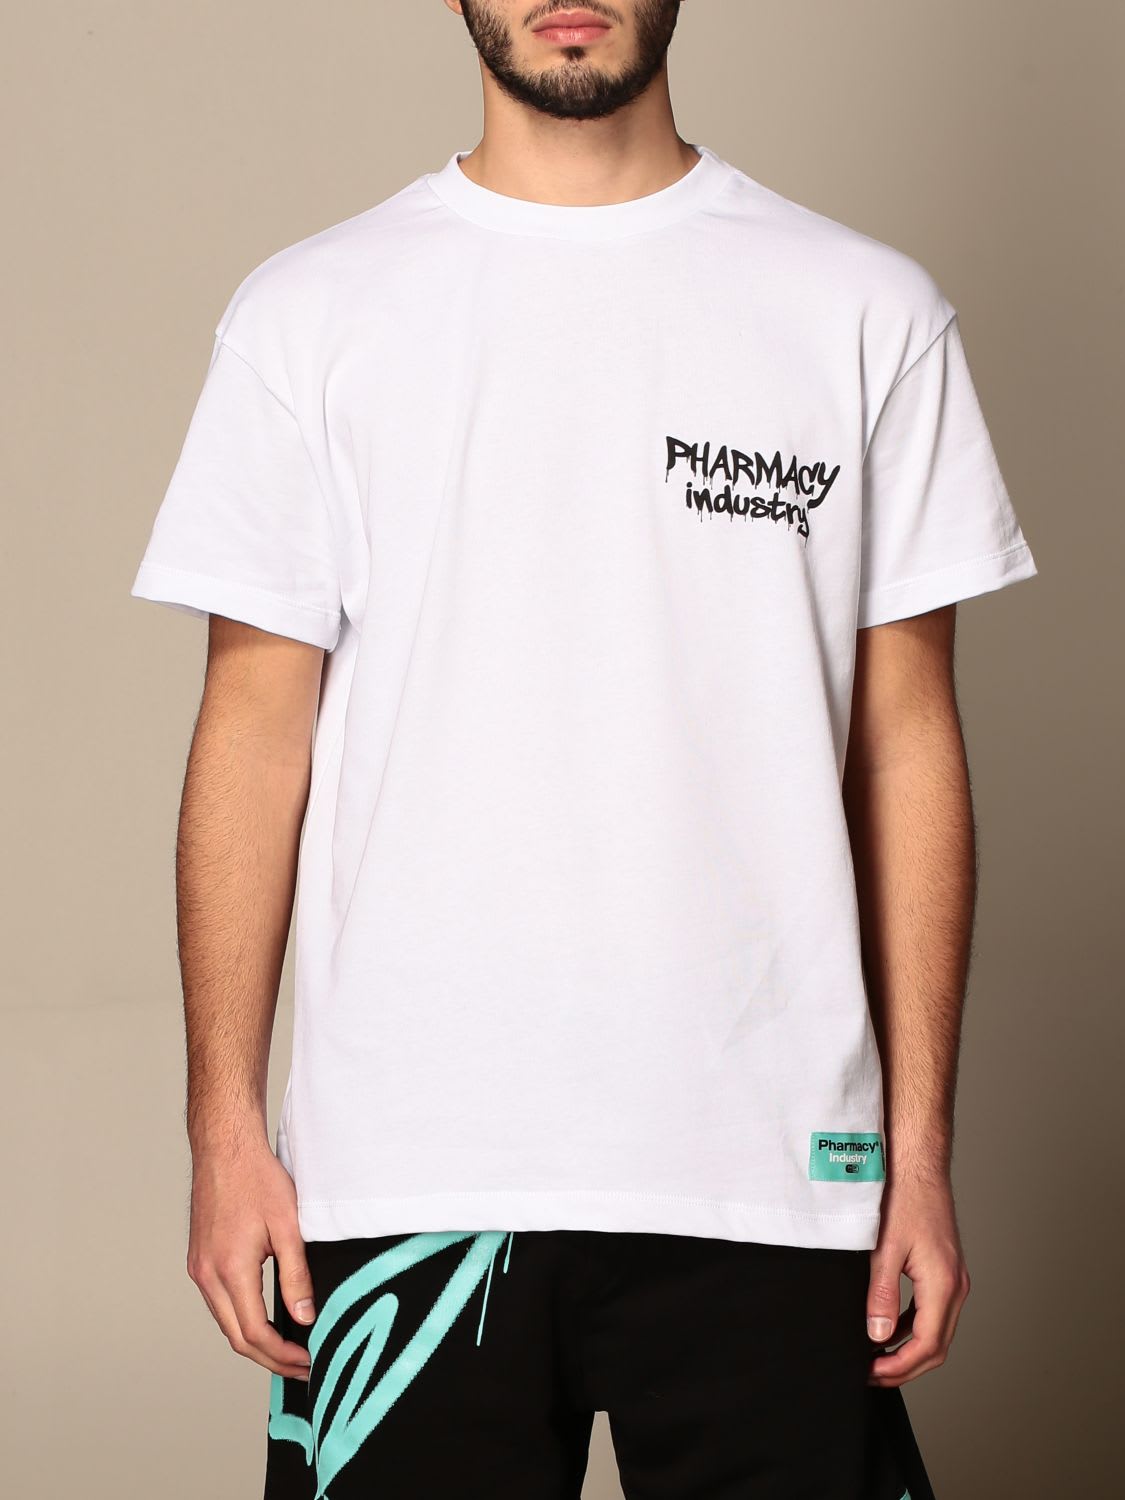 Pharmacy Industry T-shirt Pharmacy Industry Cotton T-shirt With Icecream Logo